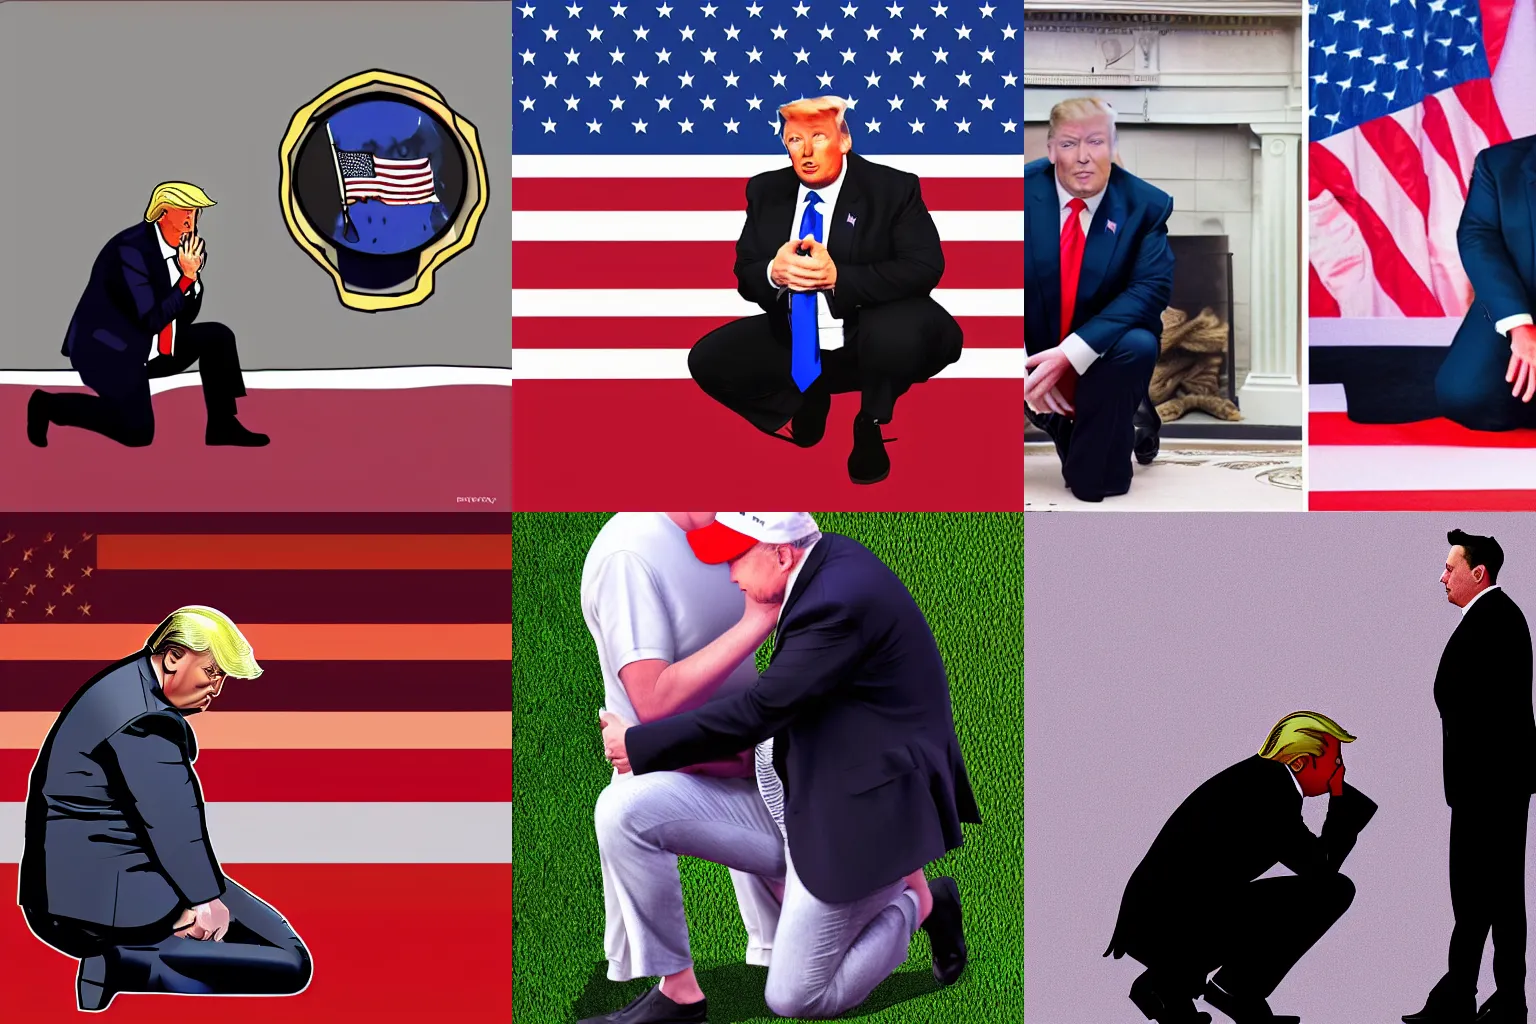 Prompt: Crying Elon Musk kneeling in front of Donald Trump, digital art